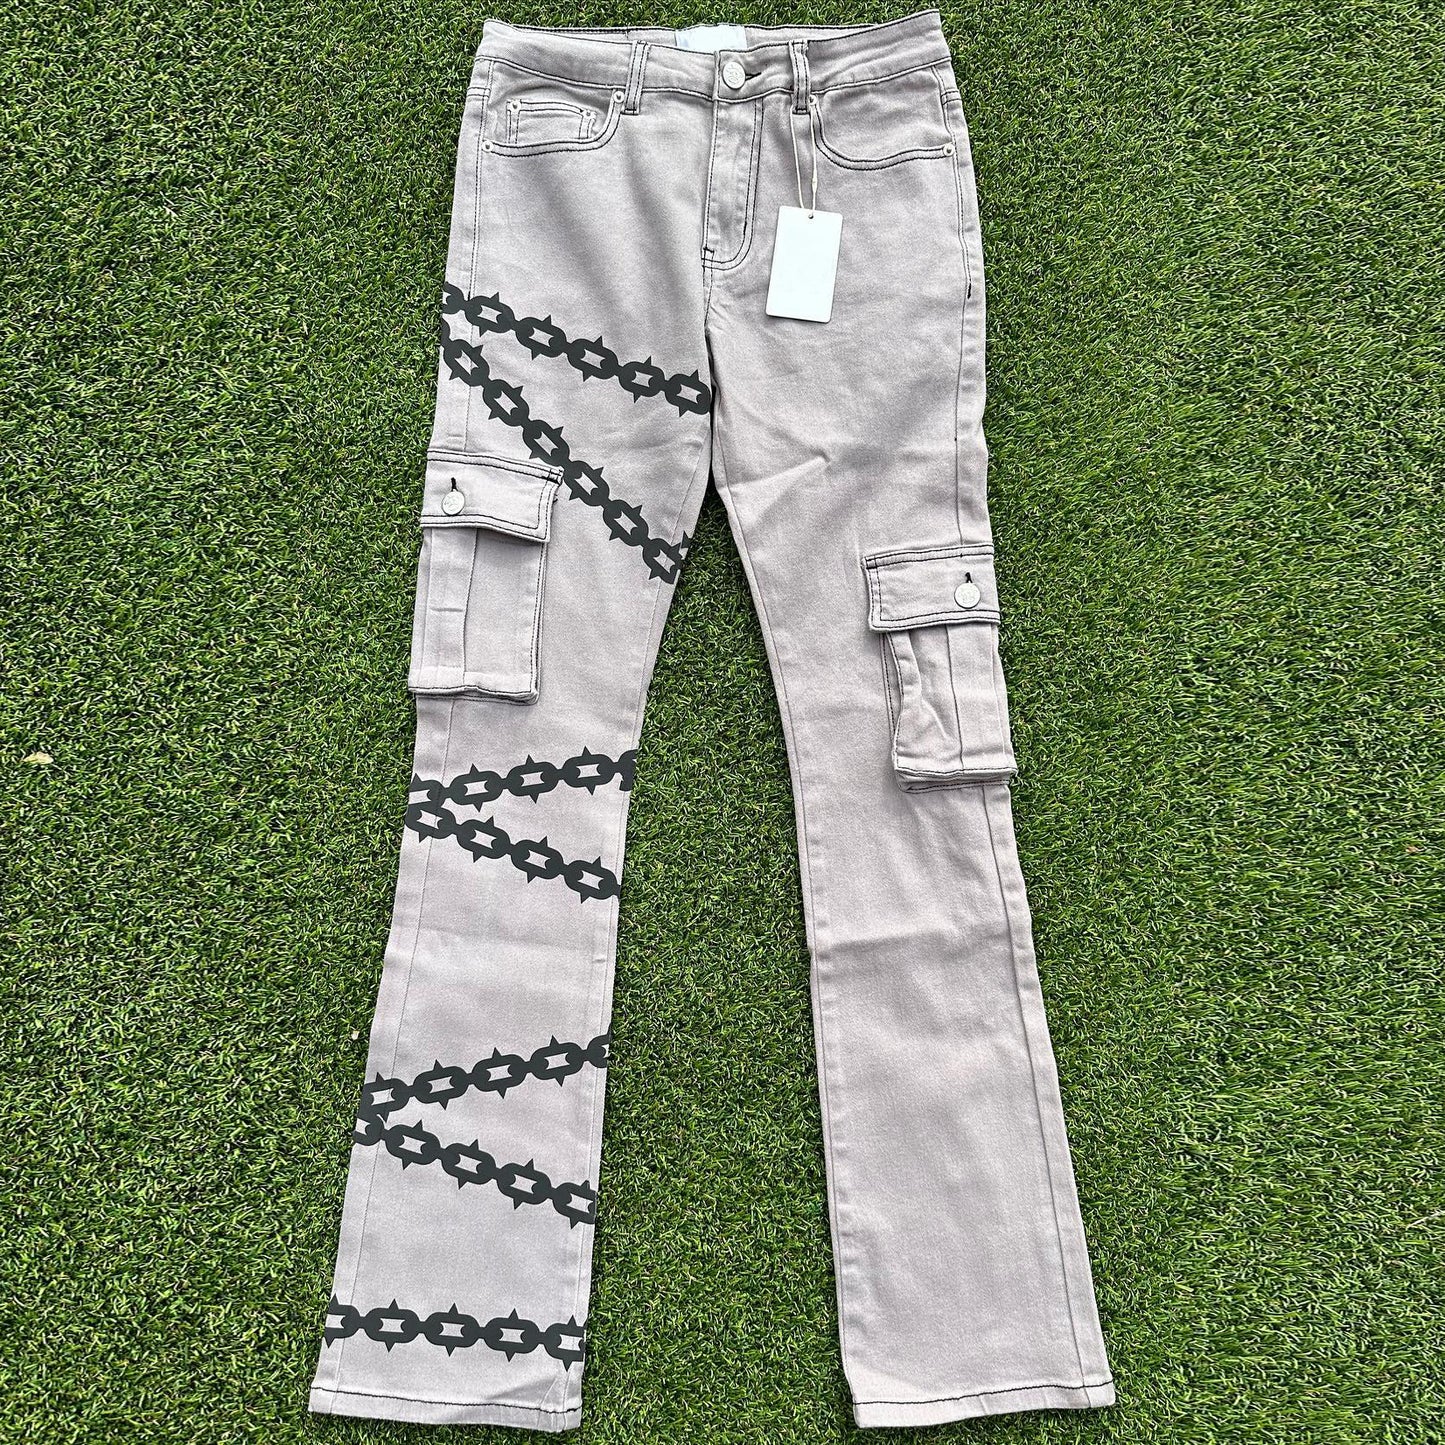 Stylish multi-pocket printed jeans